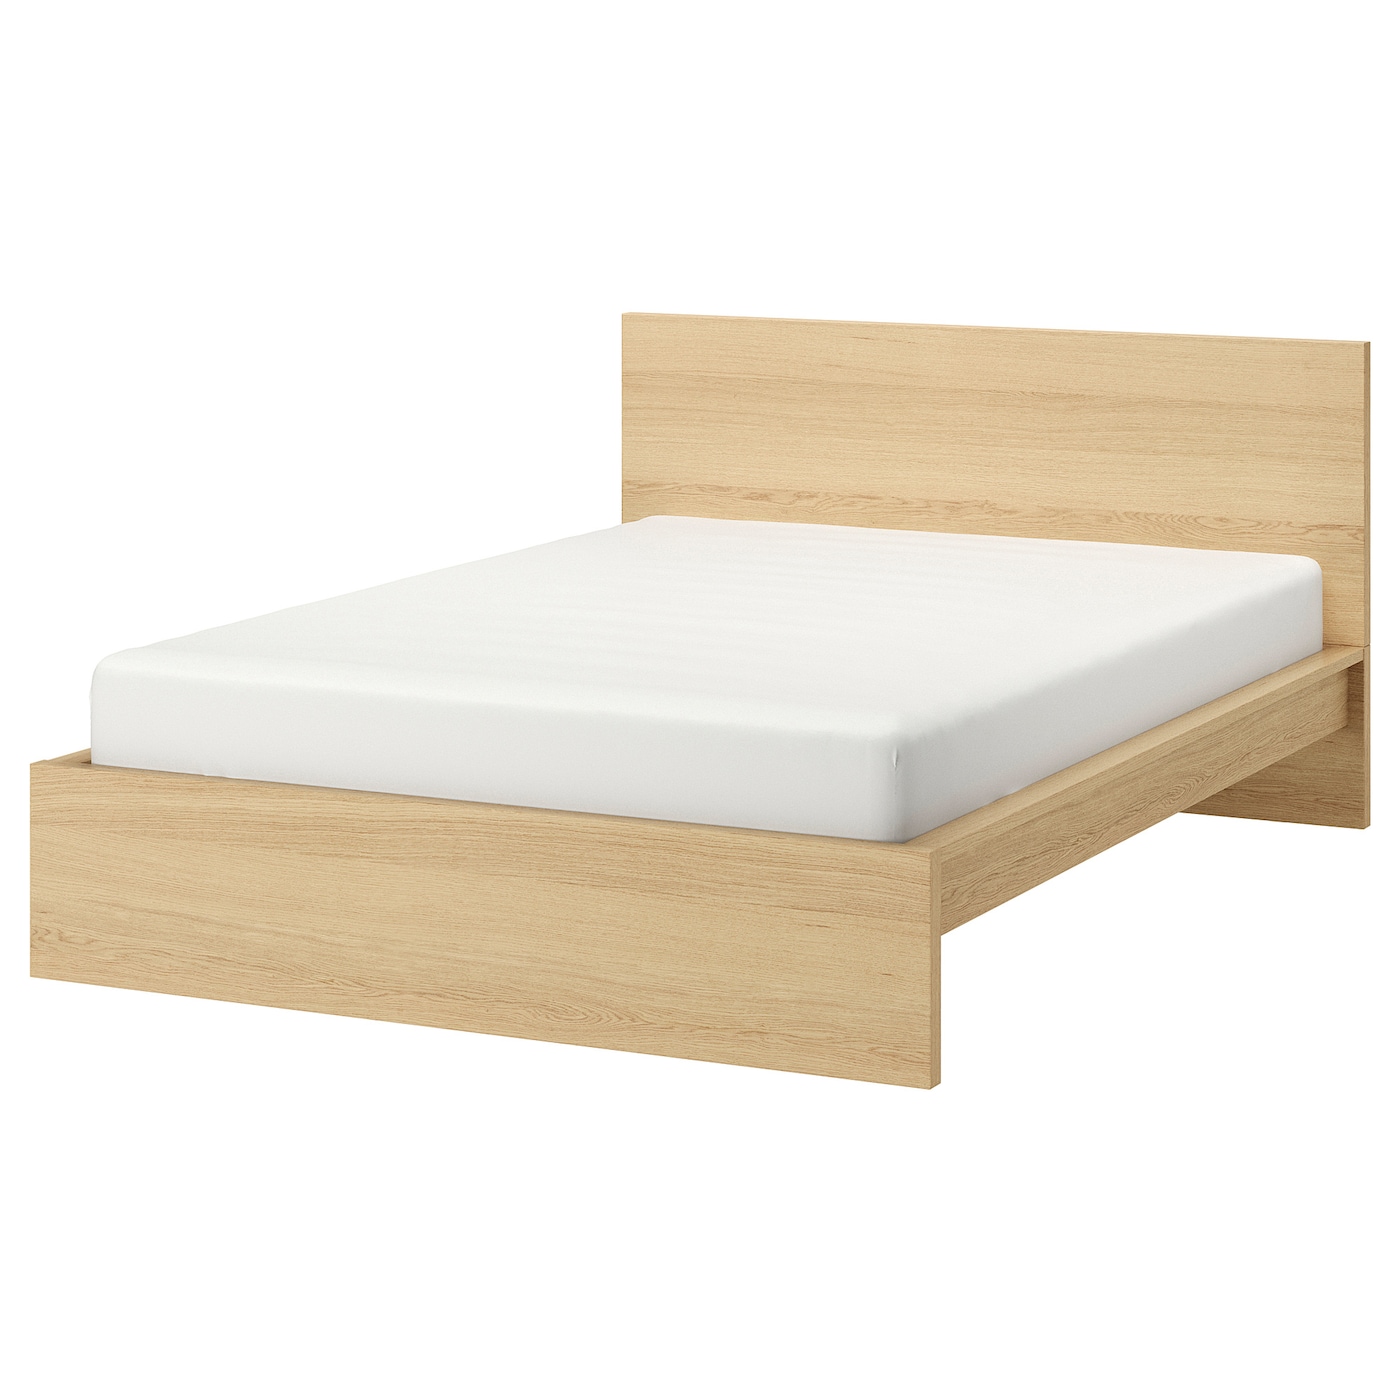 Каркас кровати - IKEA MALM, 200х180 см, под беленый дуб, МАЛЬМ ИКЕА